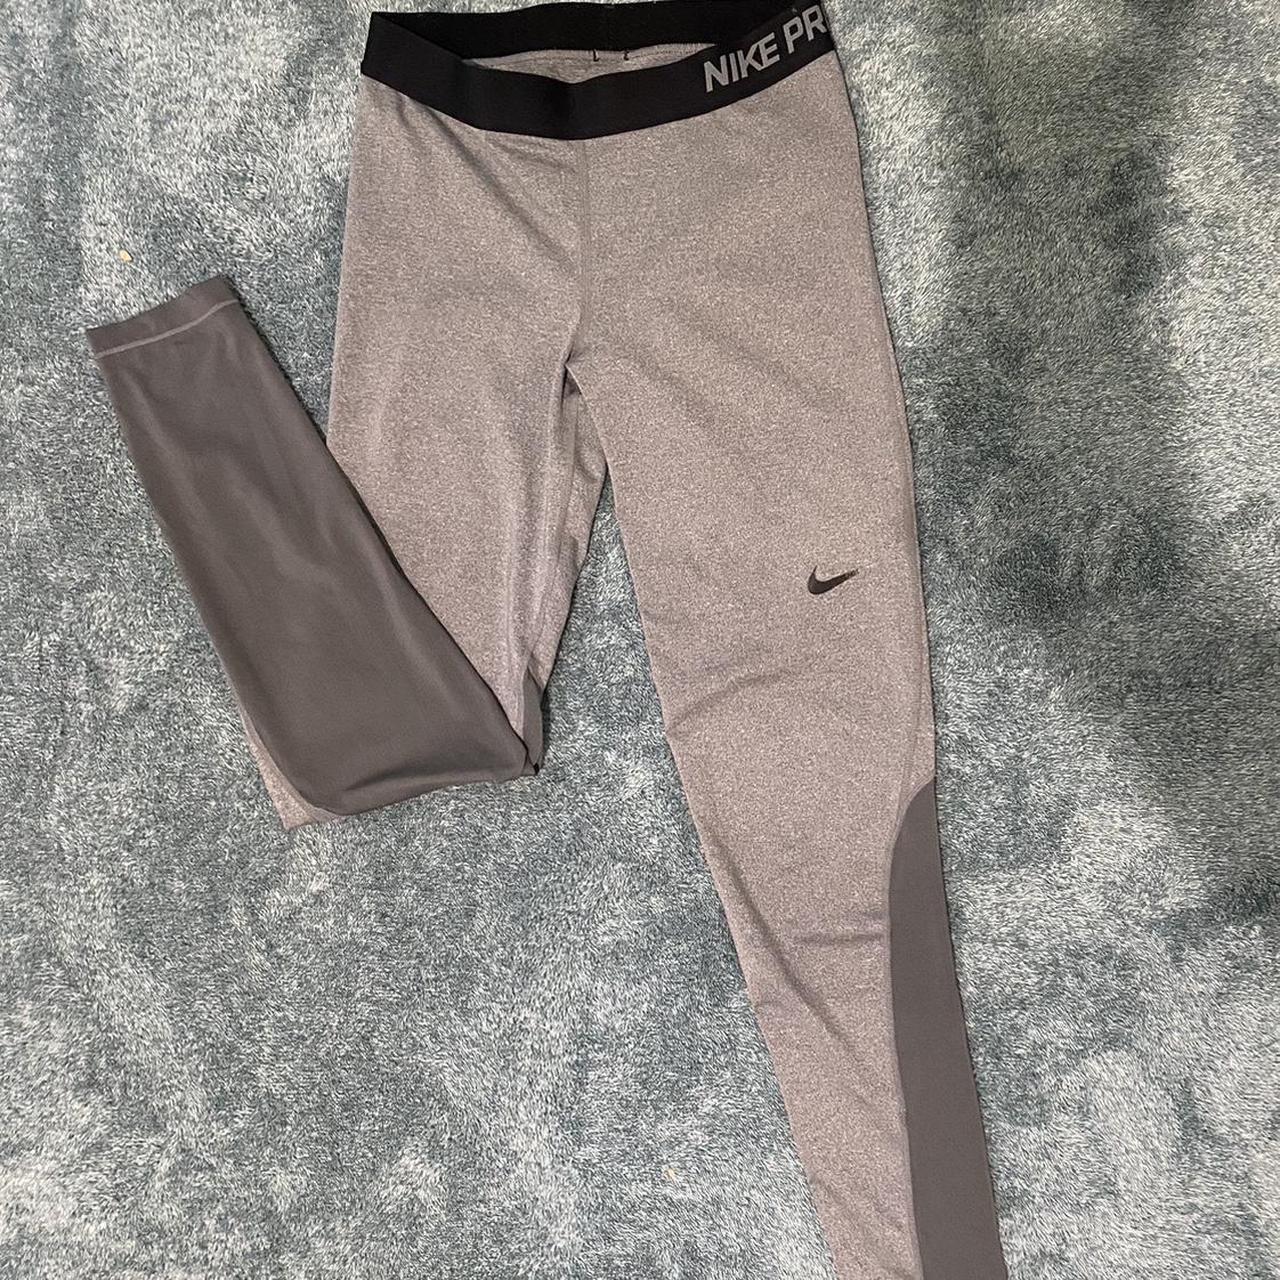 Nike dri-fit leggings(xl) patterns and designs - Depop